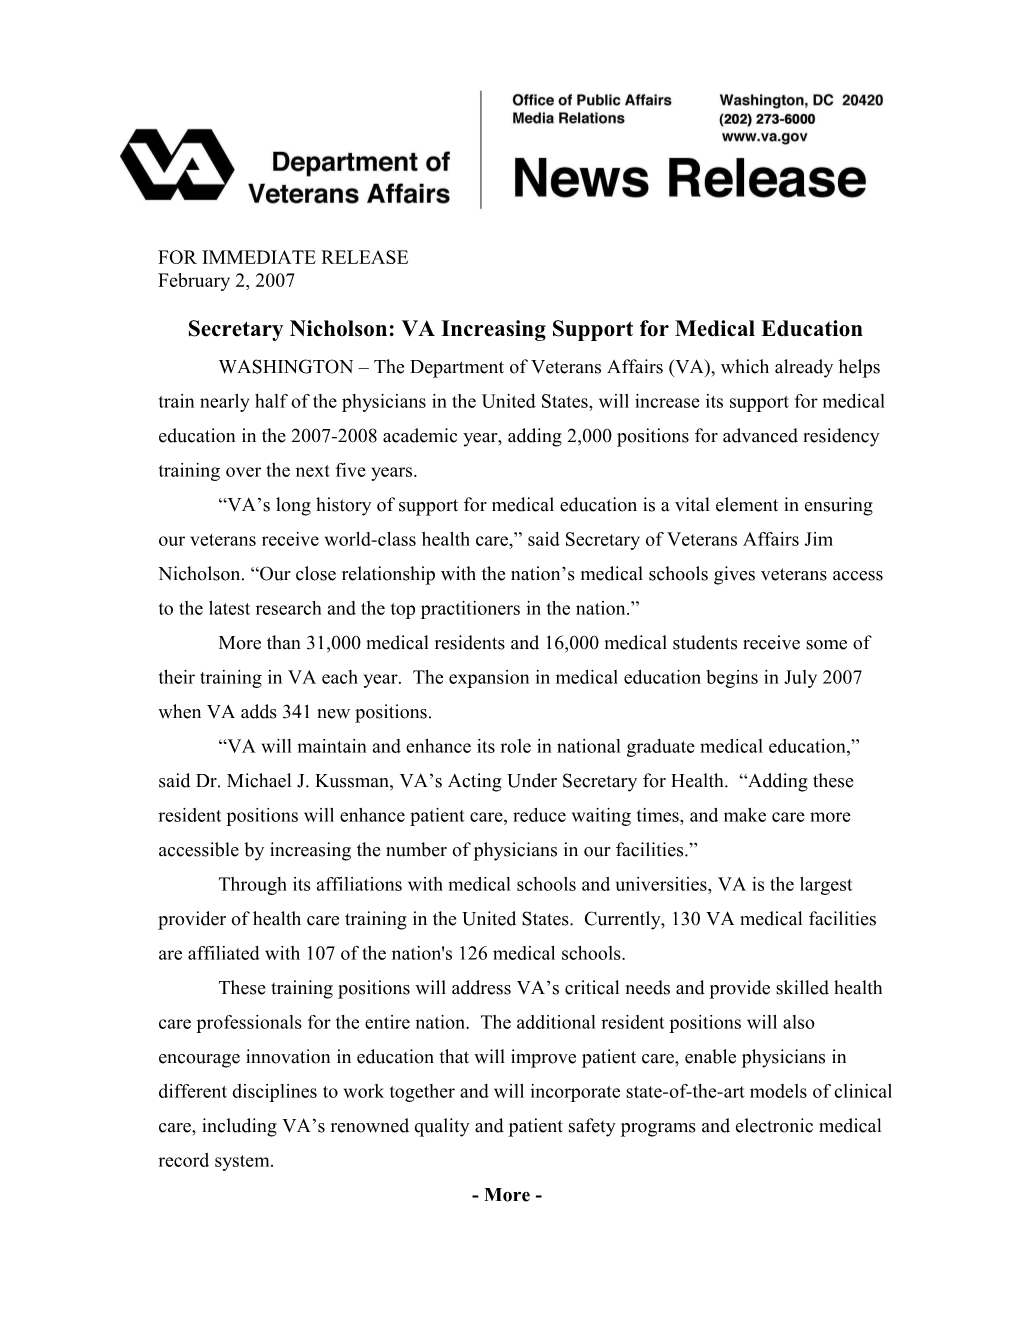 Secretary Nicholson: VA Increasing Support for Medical Education